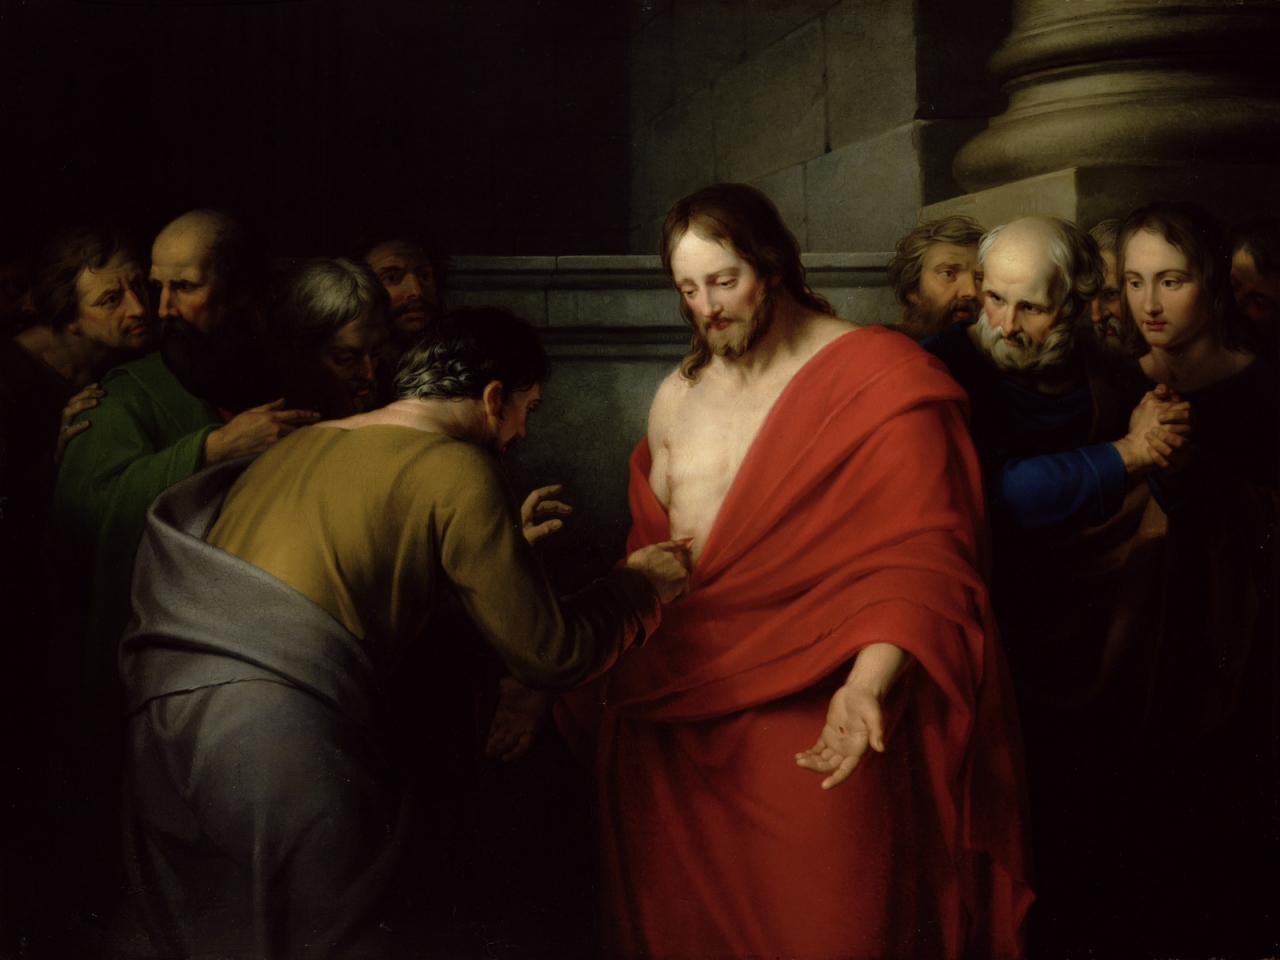 Jesus Scene for 1280 x 960 resolution